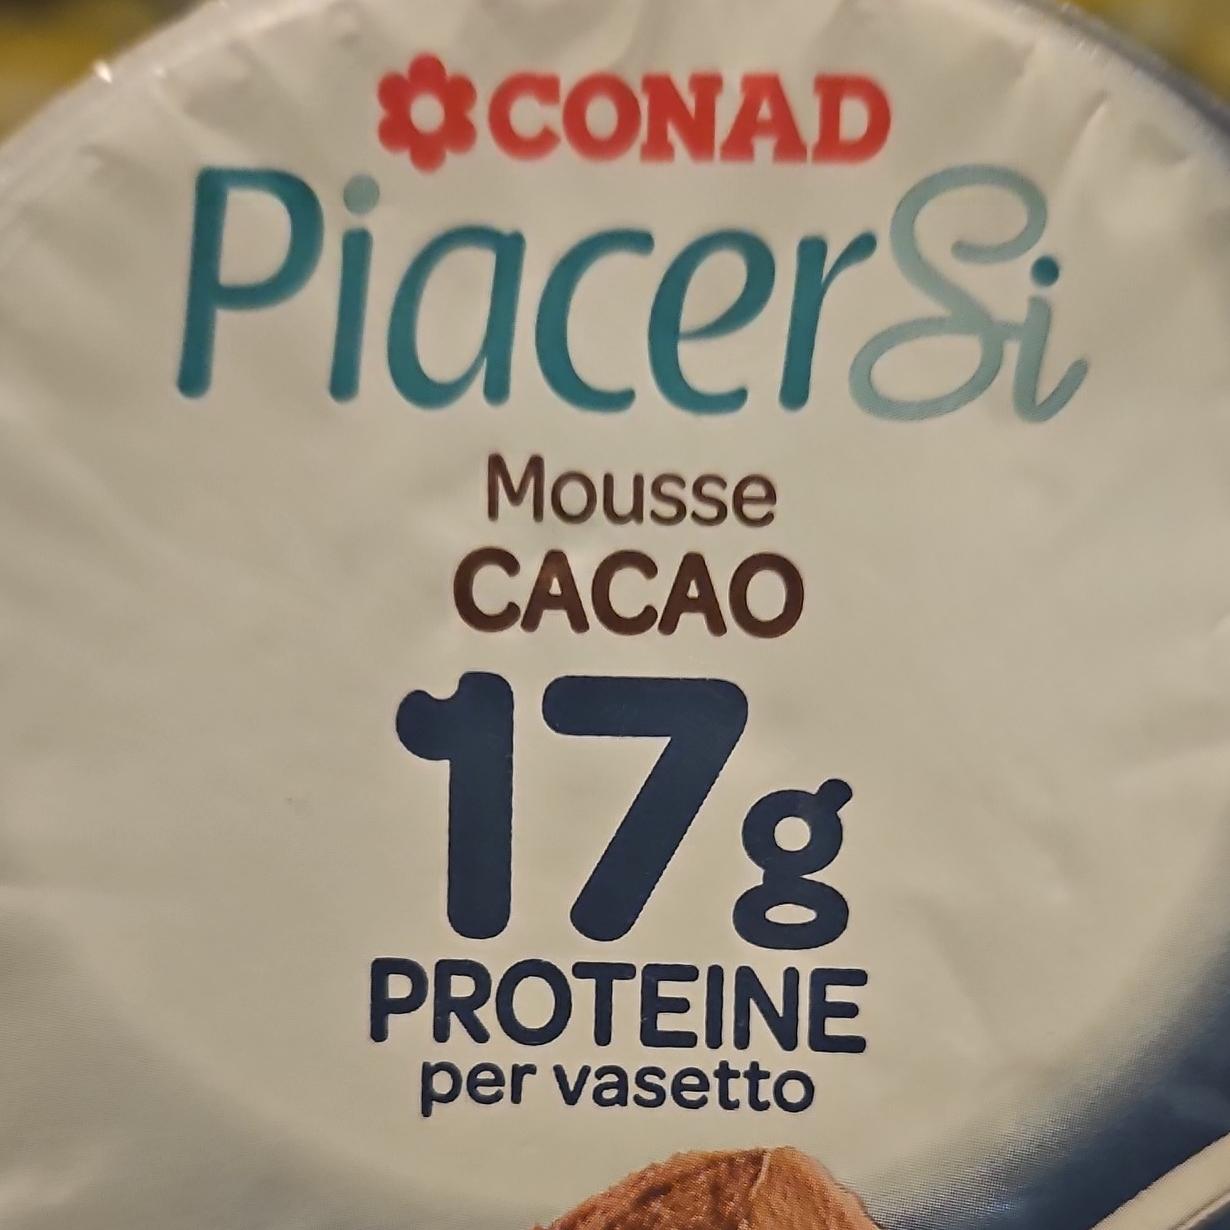 Фото - PiacerSi Mousse Cacao Conad